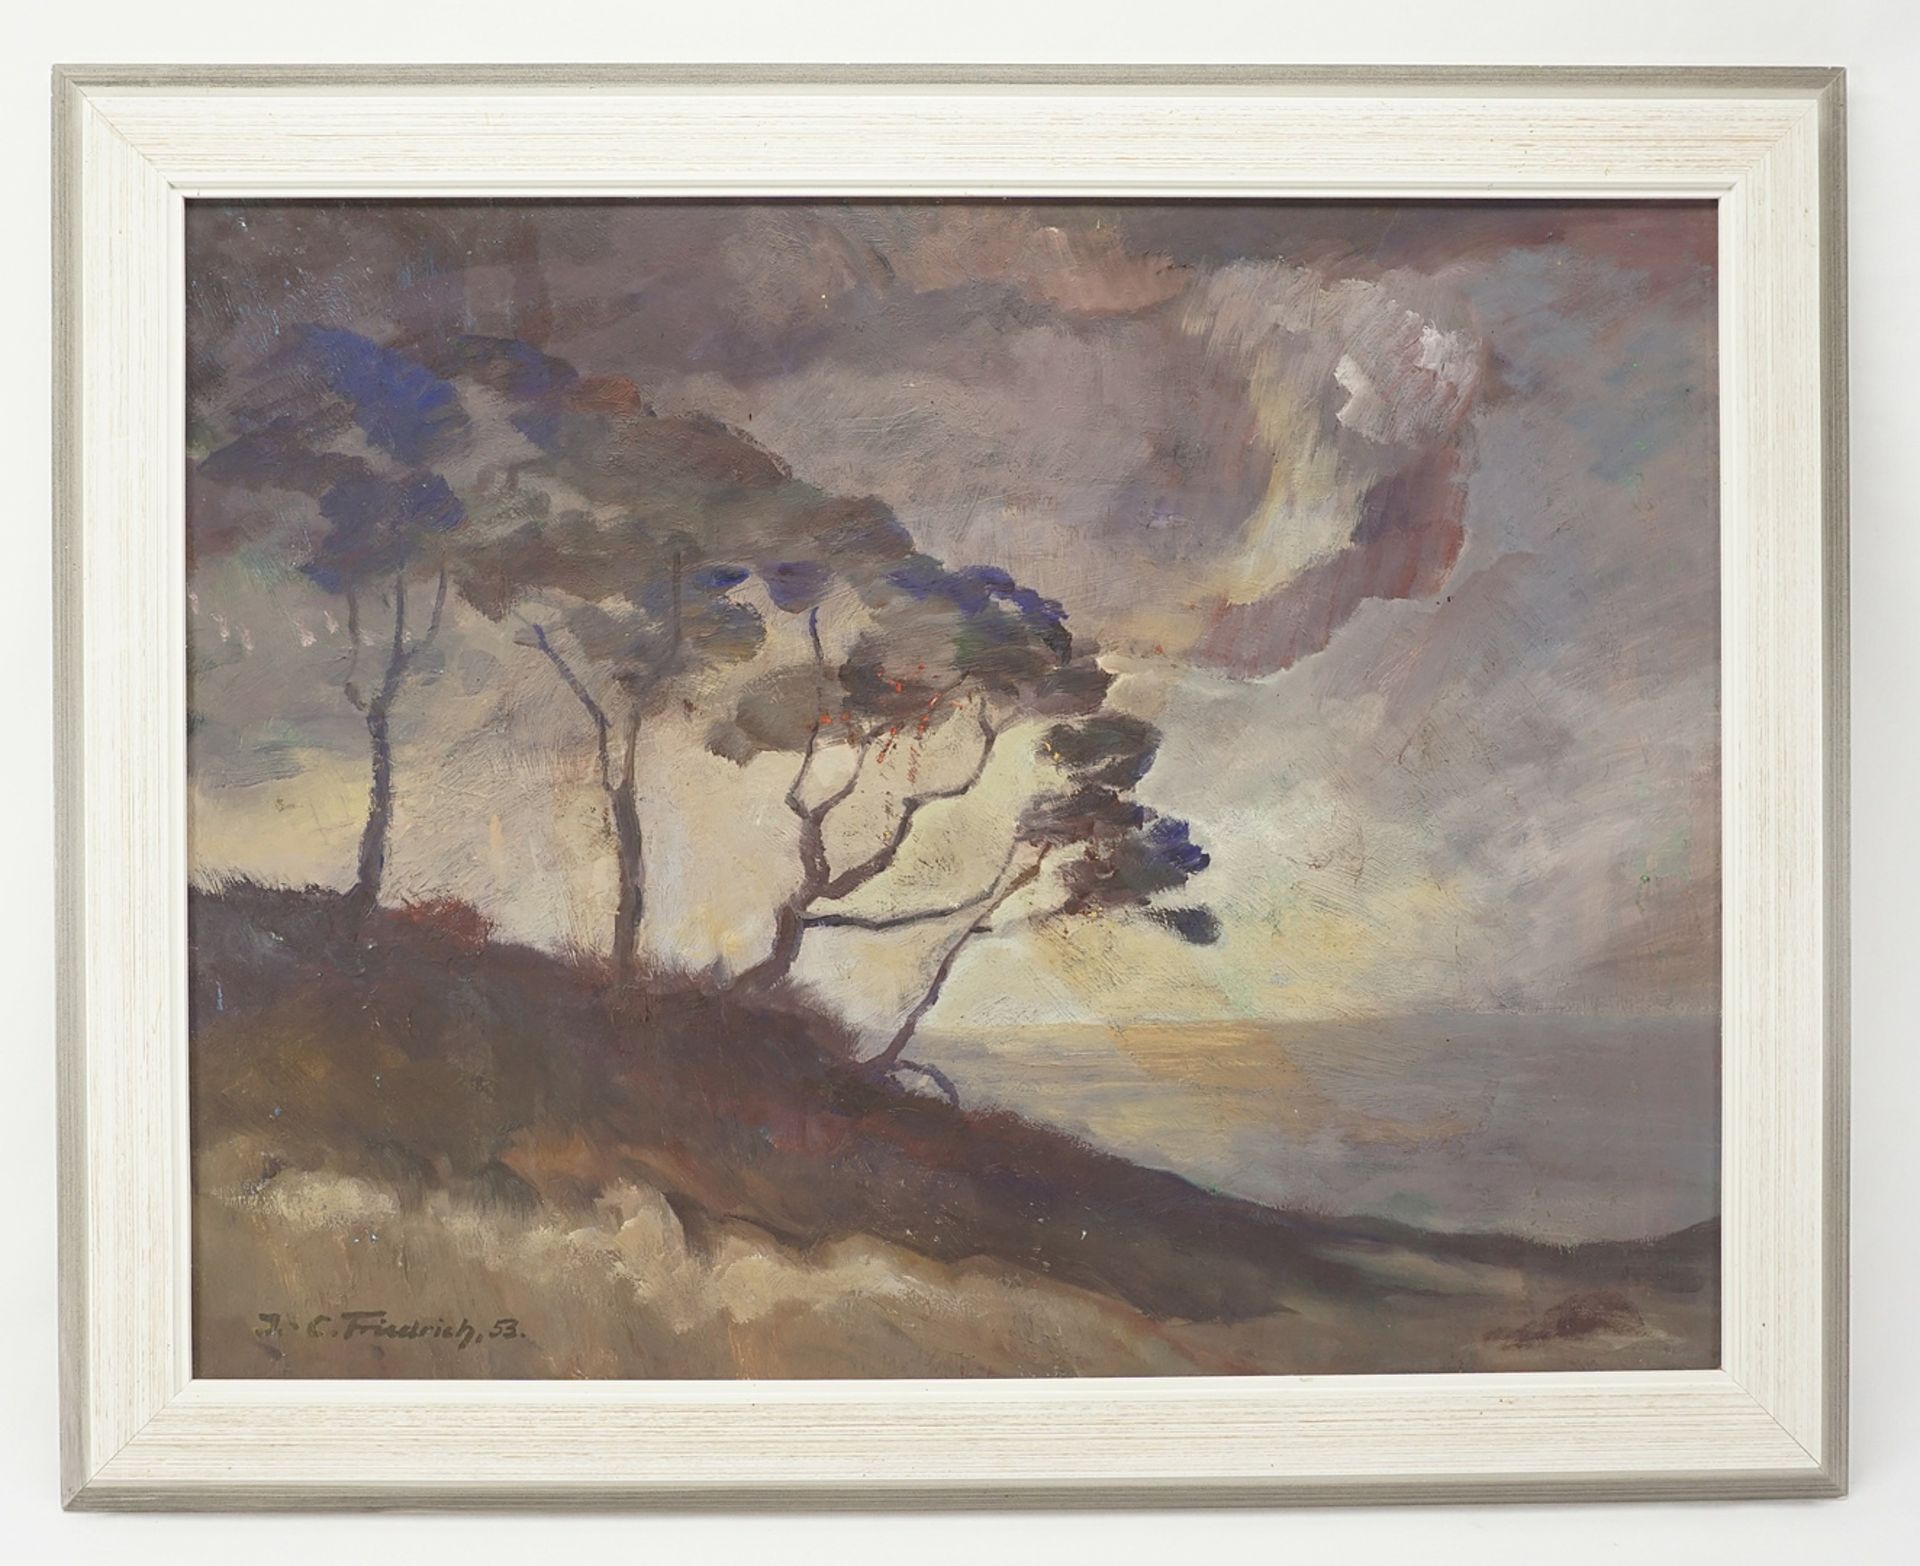 J.C. Friedrich, Stormy landscape - Image 2 of 4